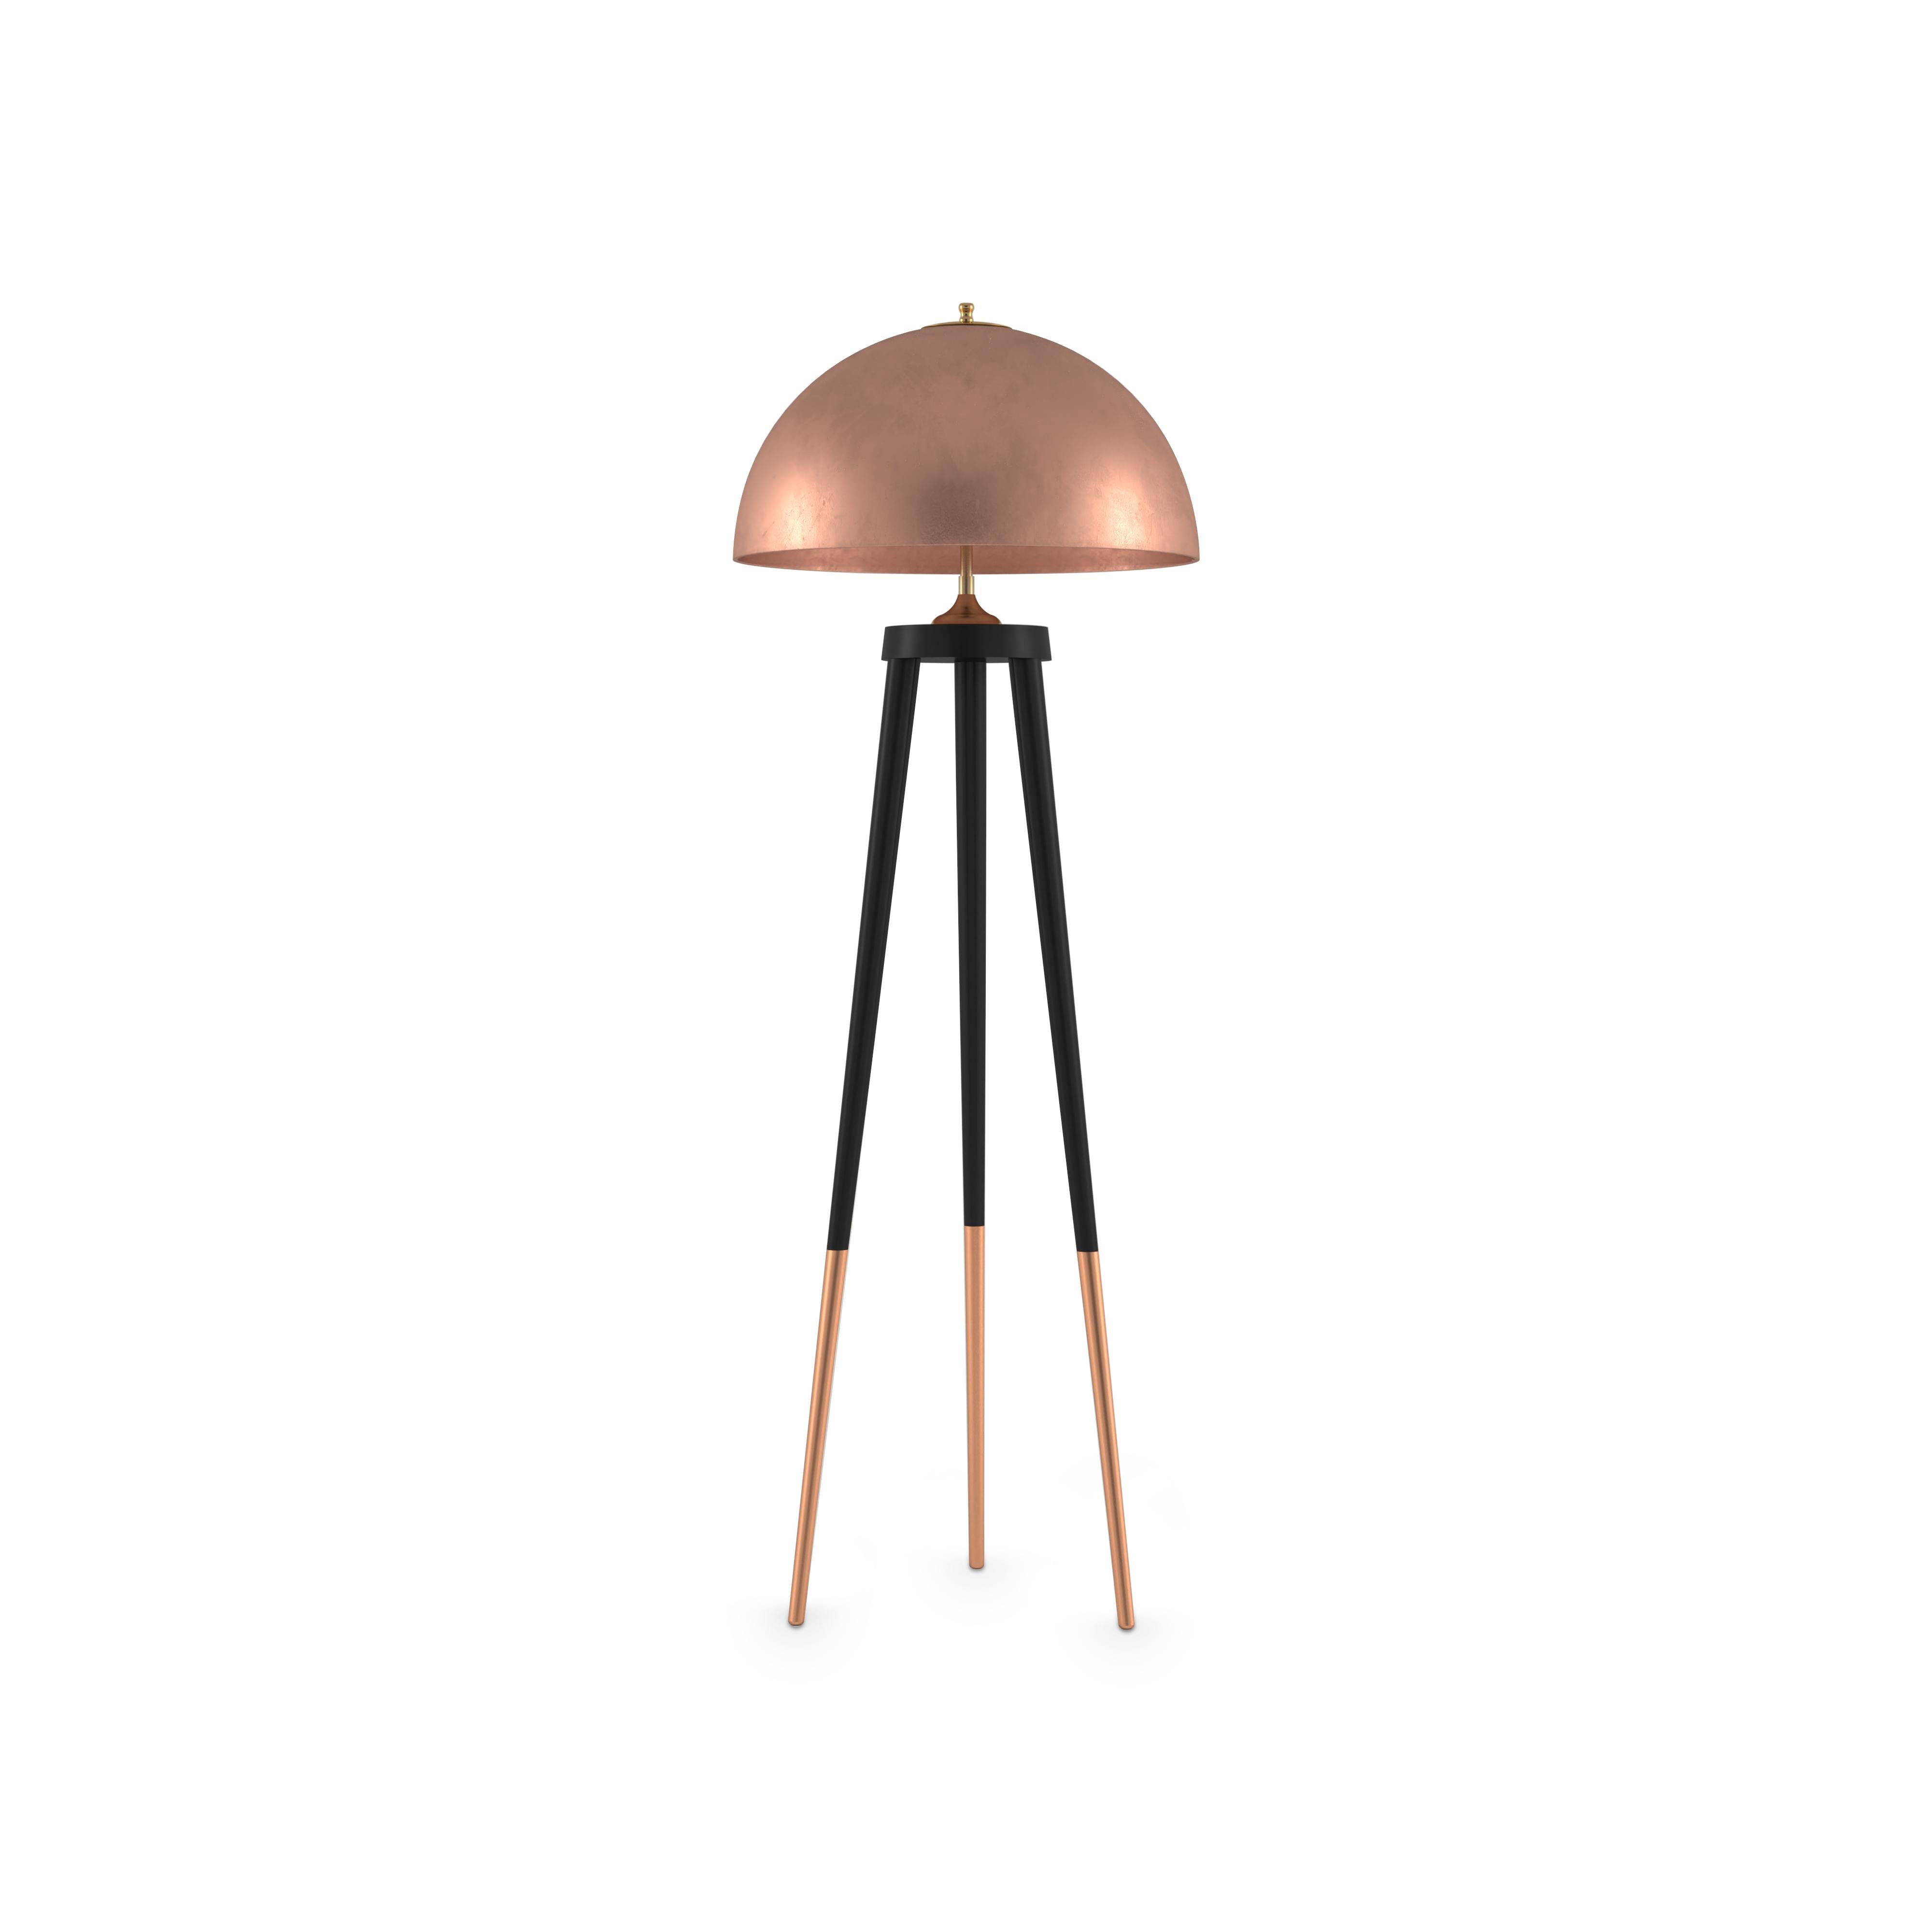 Portuguese 21st Century Brera Floor Lamp Brass Wood Fiberglass by Creativemary For Sale